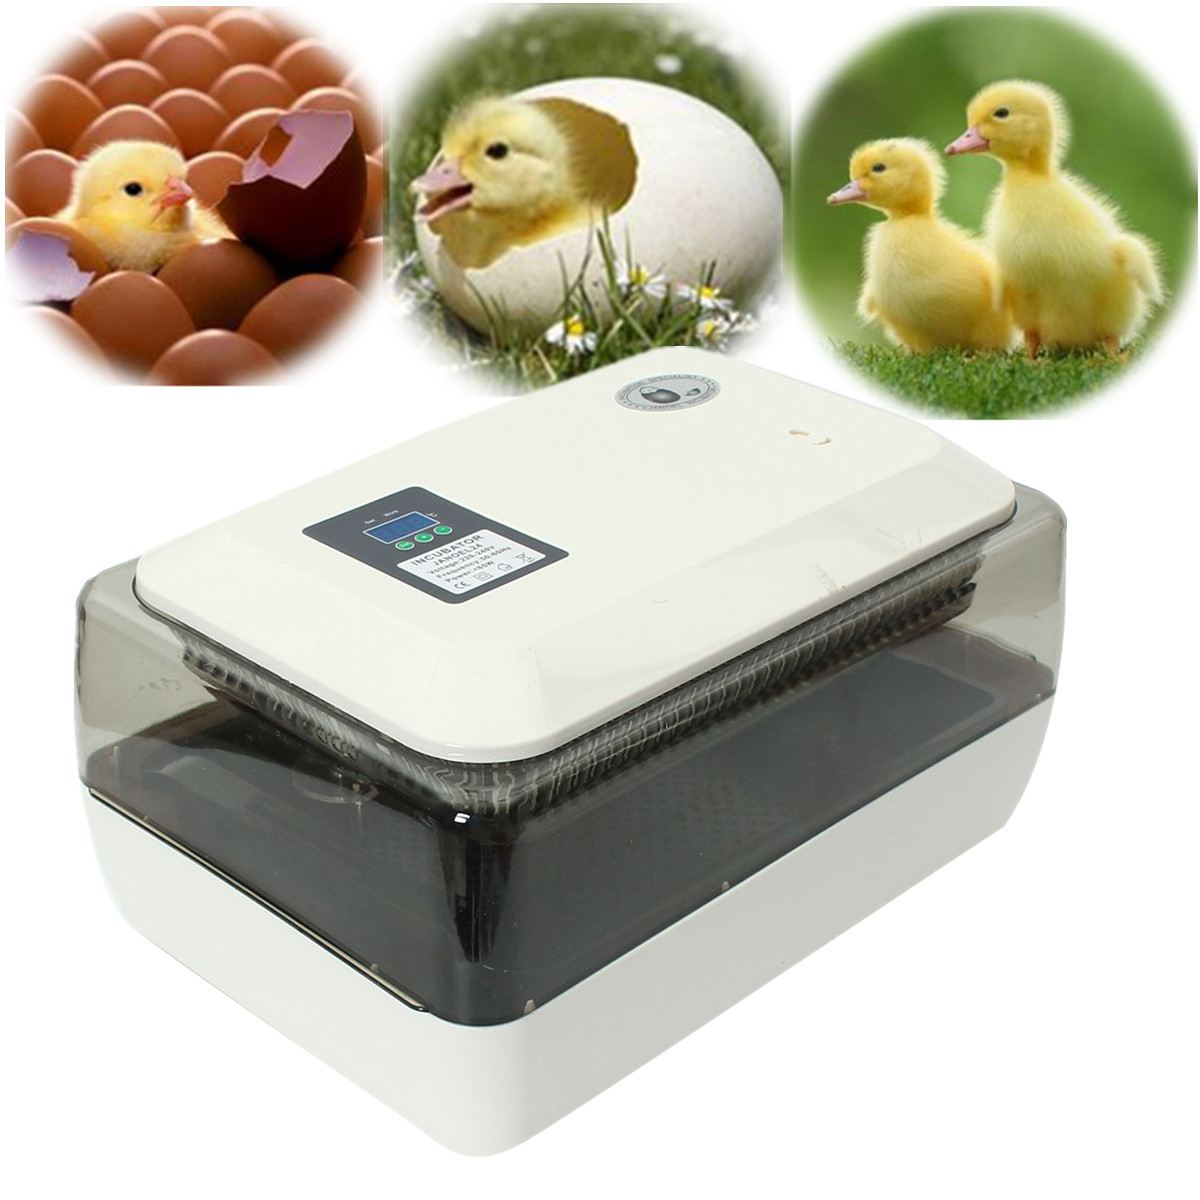 Egg-Incubator-Incubator-Hatcher-24-Digital-Fully-Automatic-Clear-Egg-Turning-Incubator-Hatcher-1359922-10